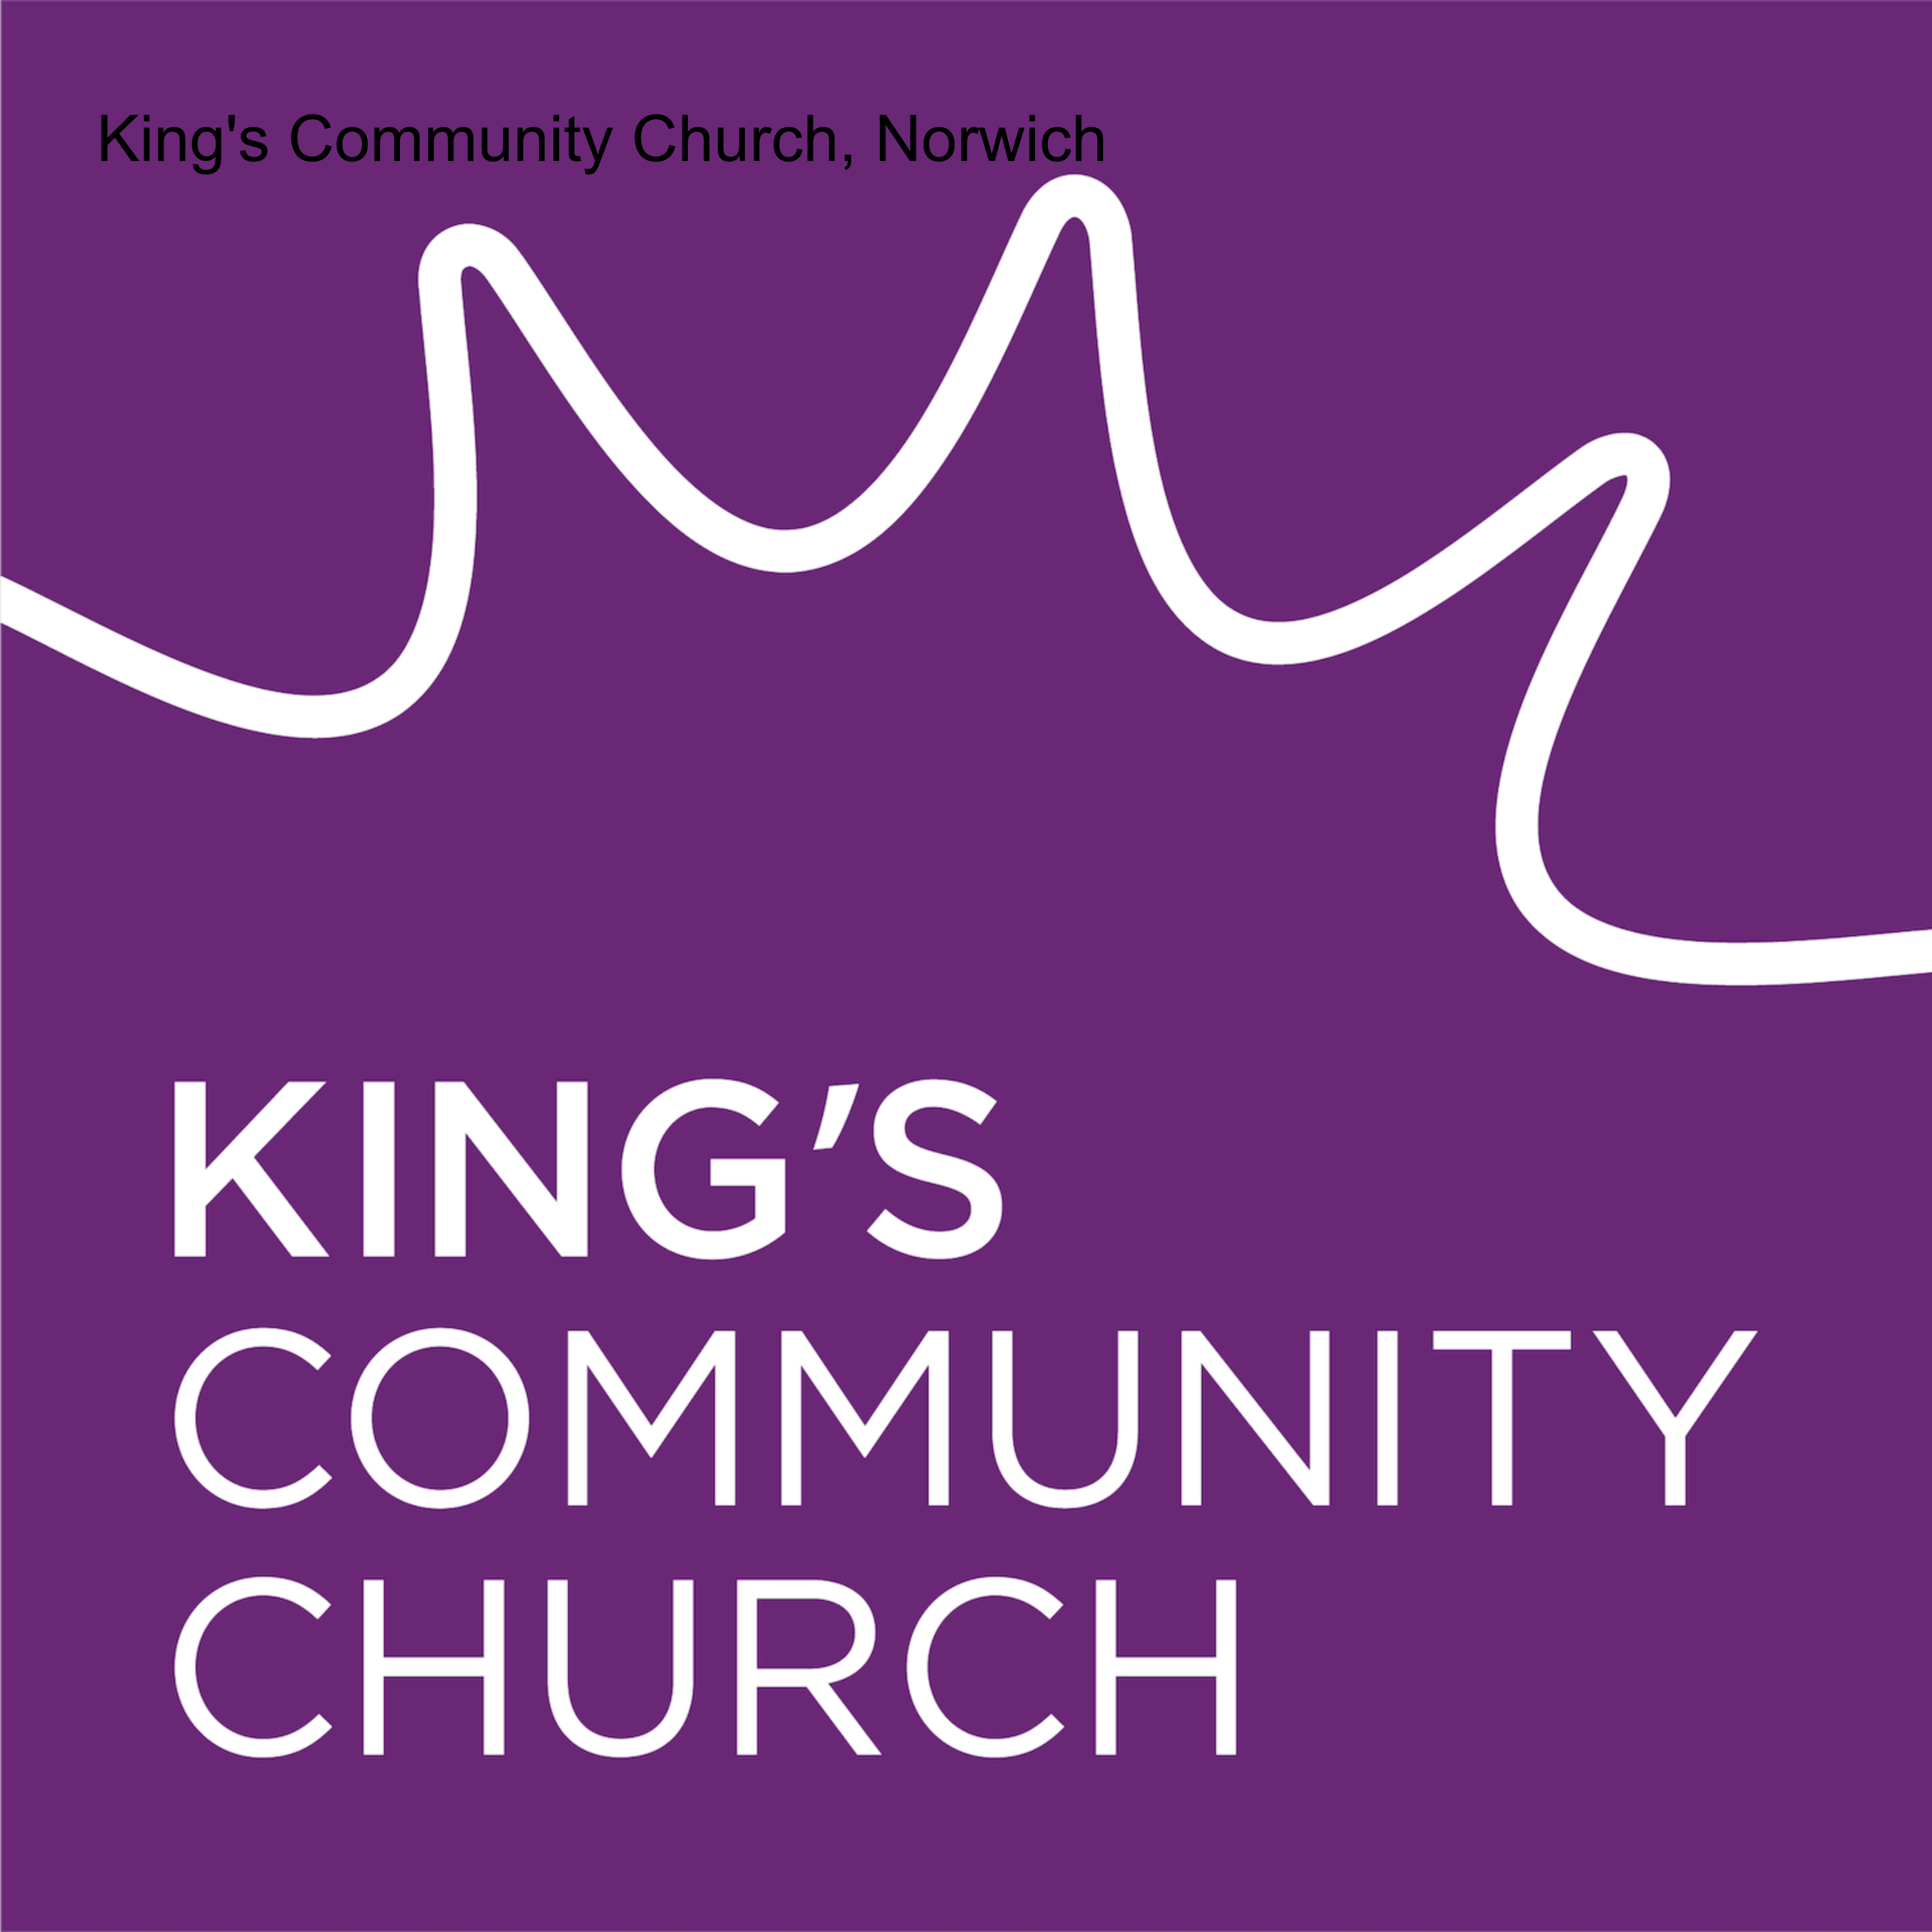 King's Community Church, Norwich